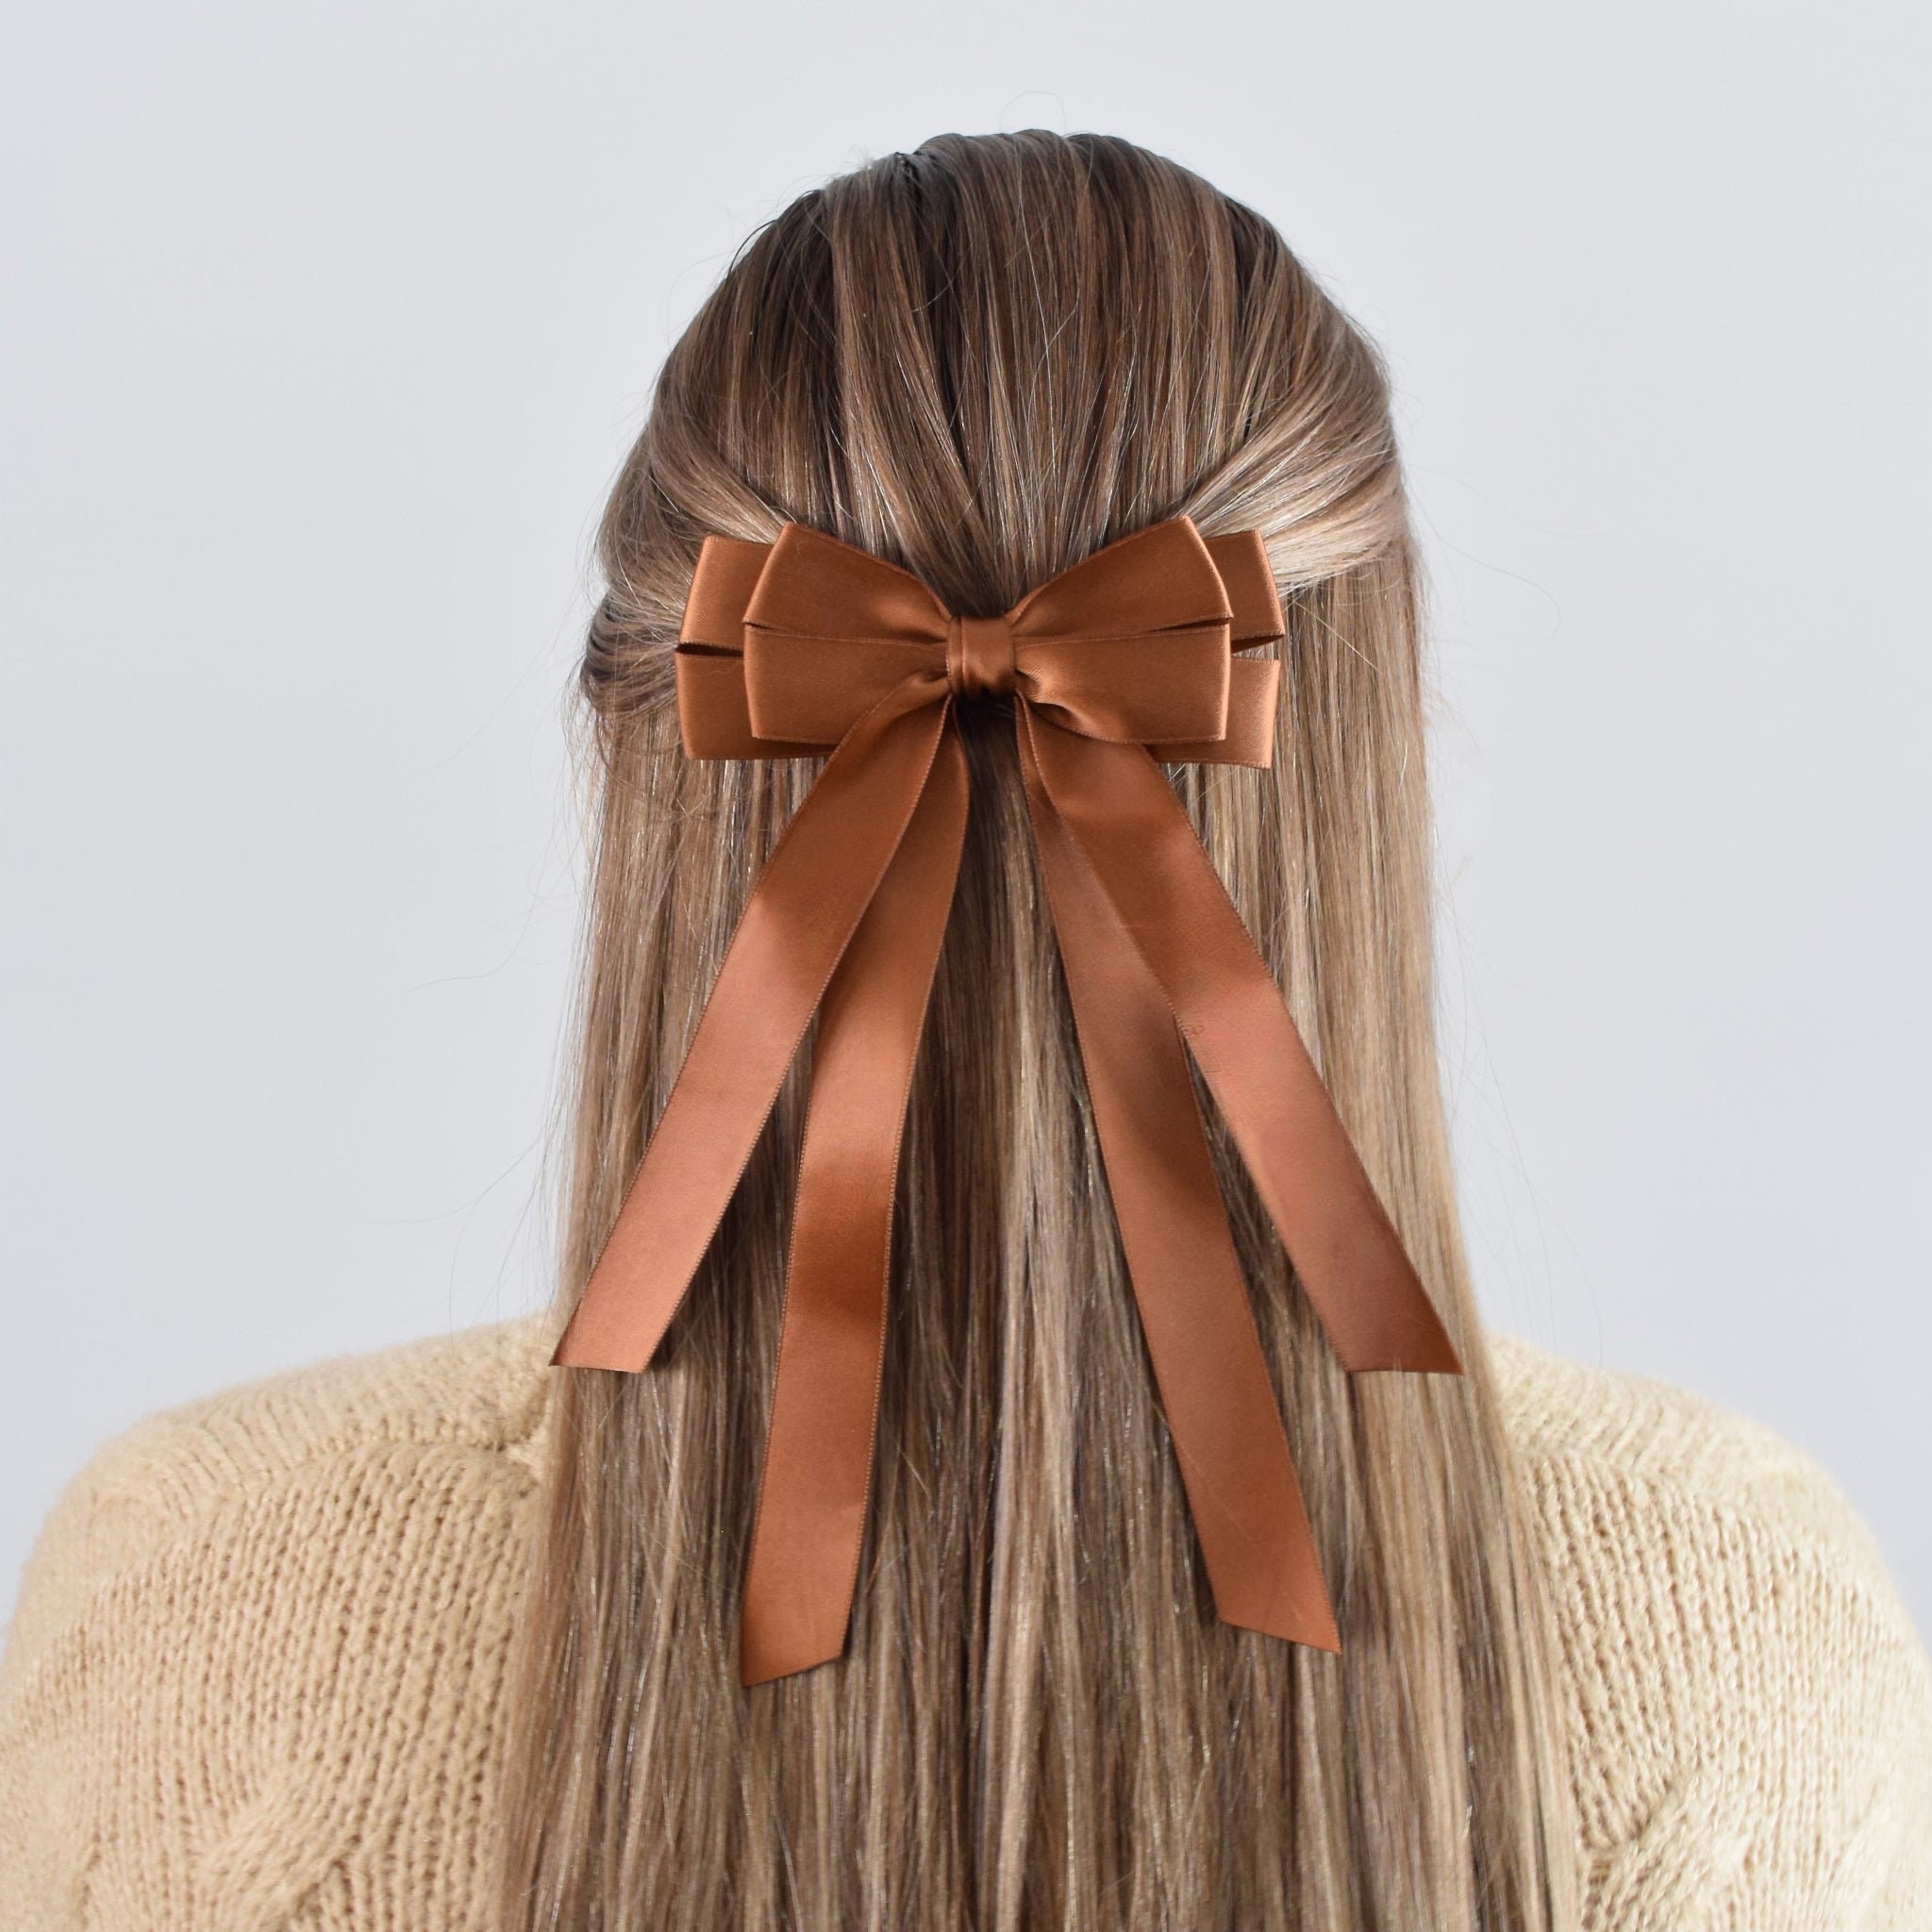 cnhairaccessories Silver Edge Ribbon Hair Bows for Girls Pink